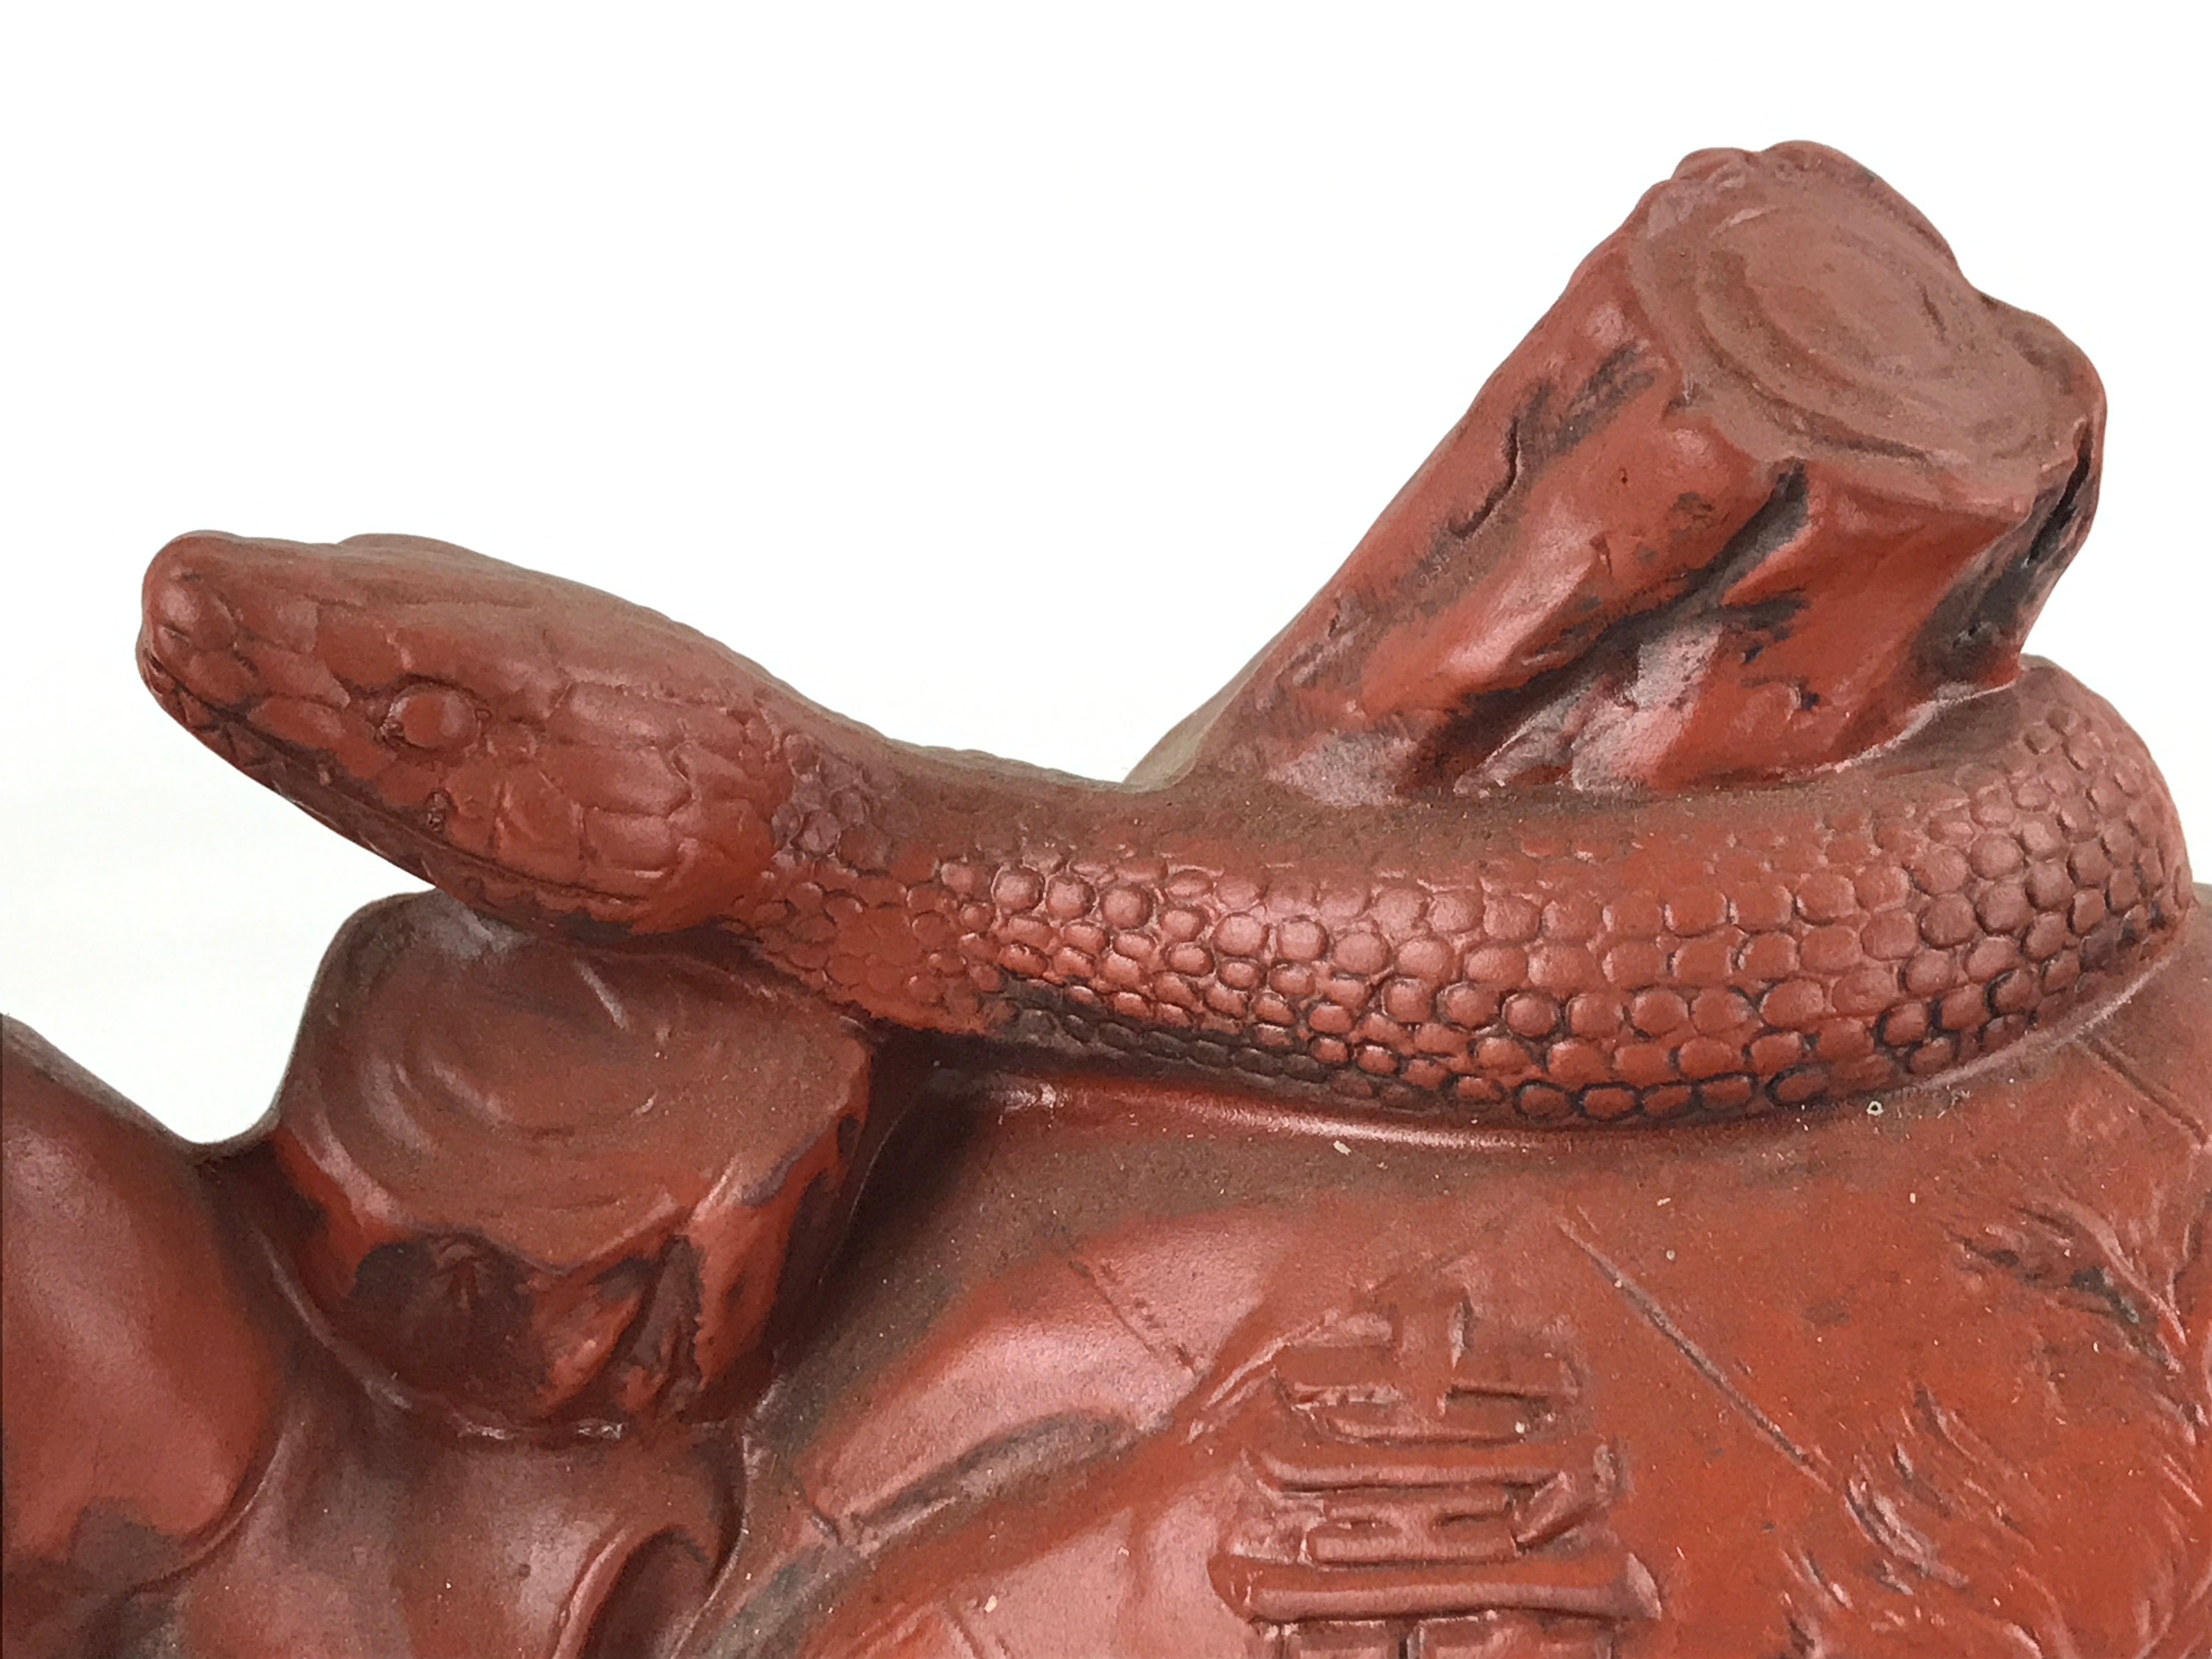 Japanese Ceramic Daikoku Statue Vtg Brown 7 Lucky Gods Snake Phoenix BD946